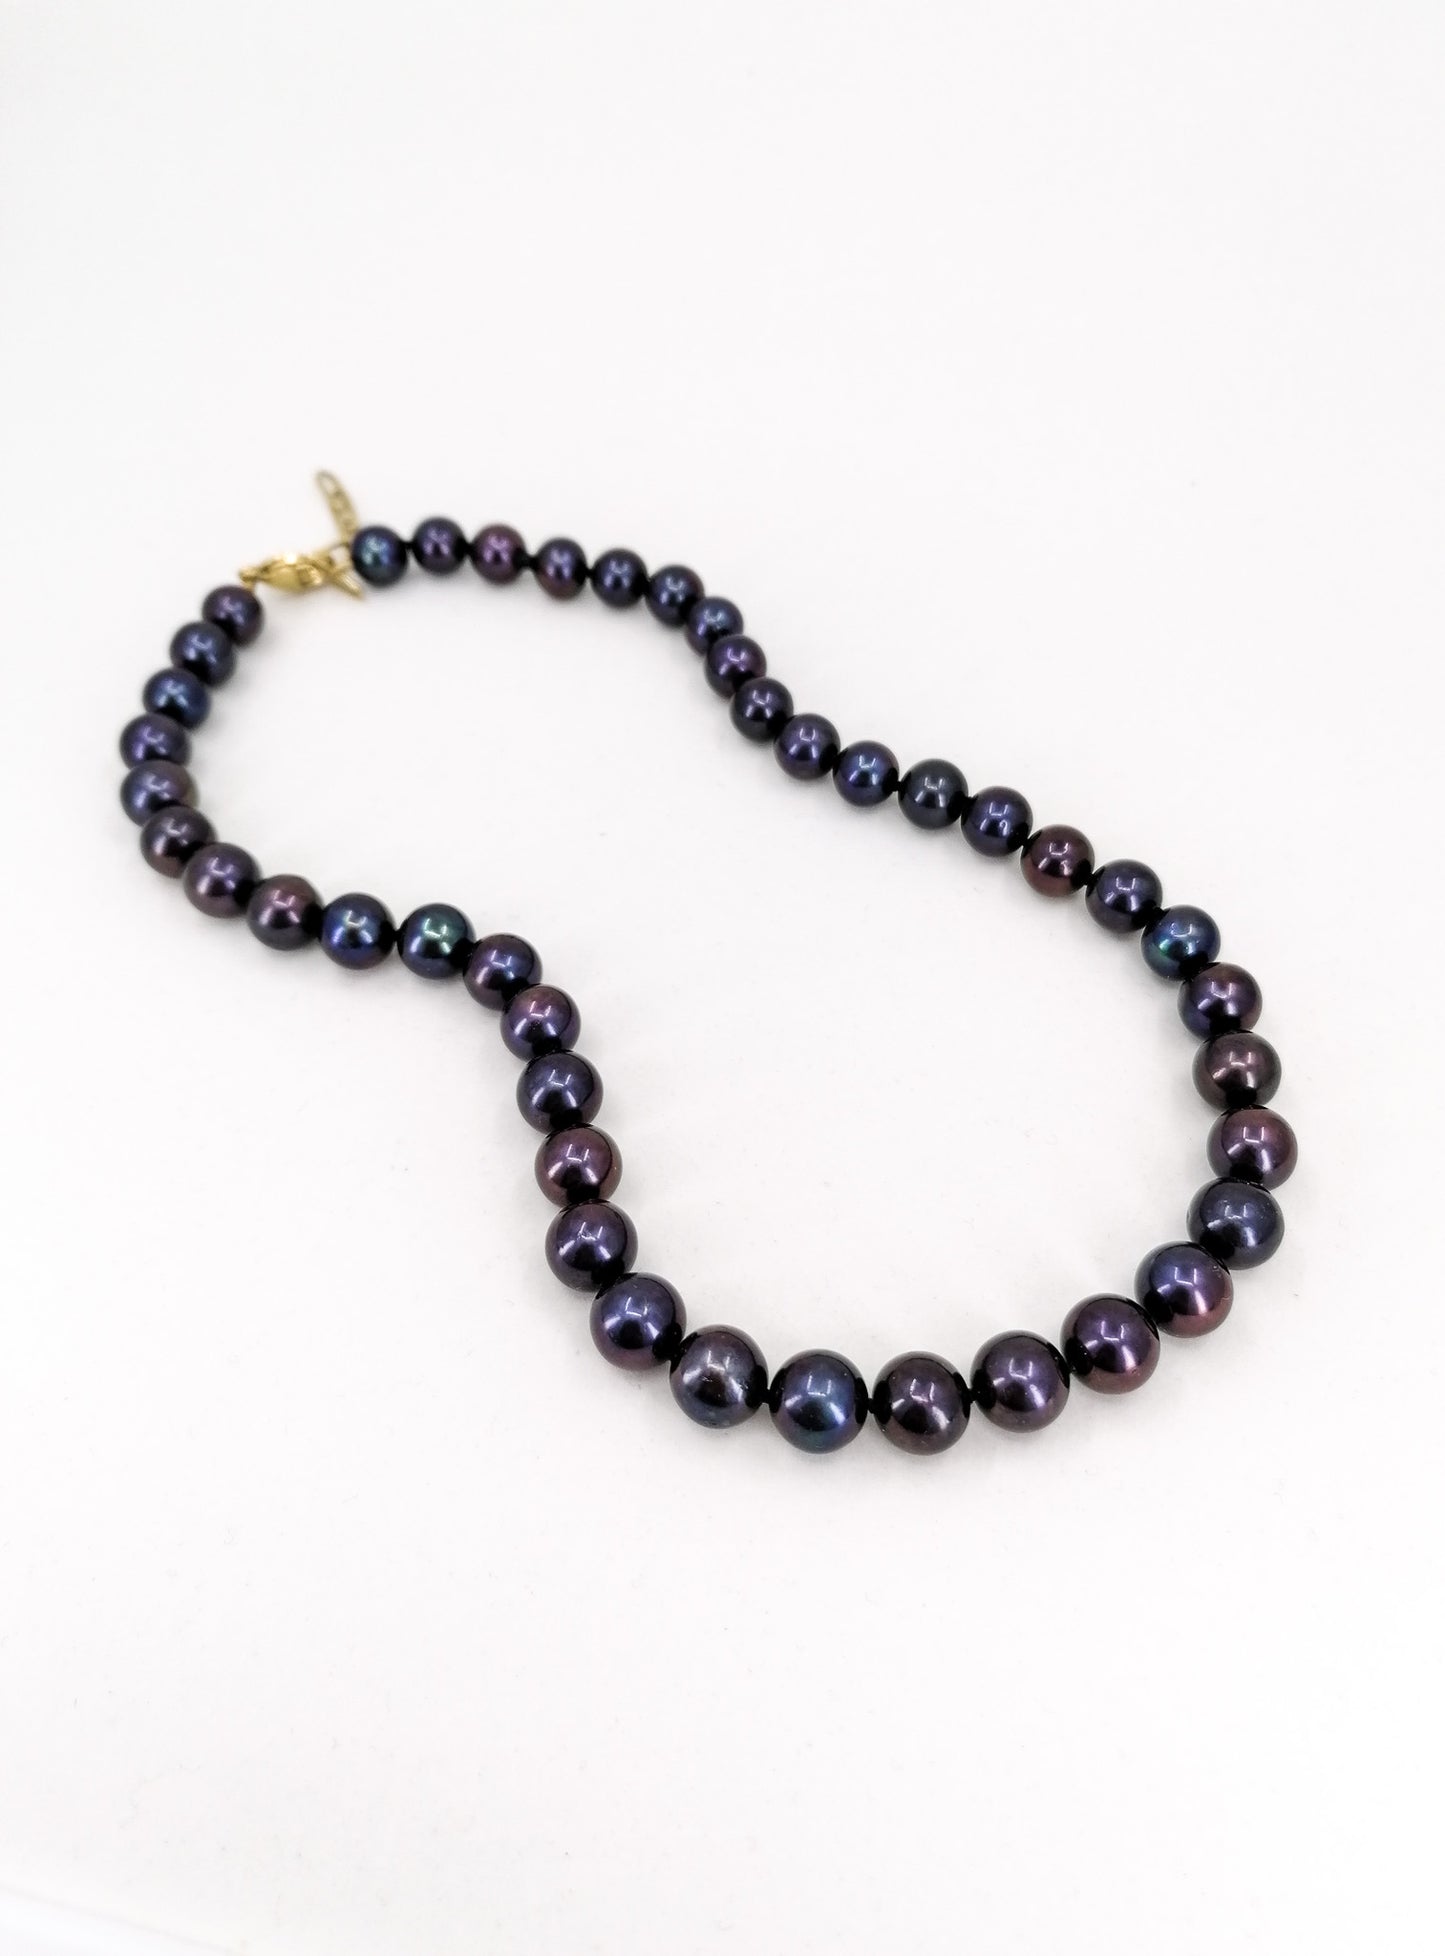 Black pearl necklace - blue overtone